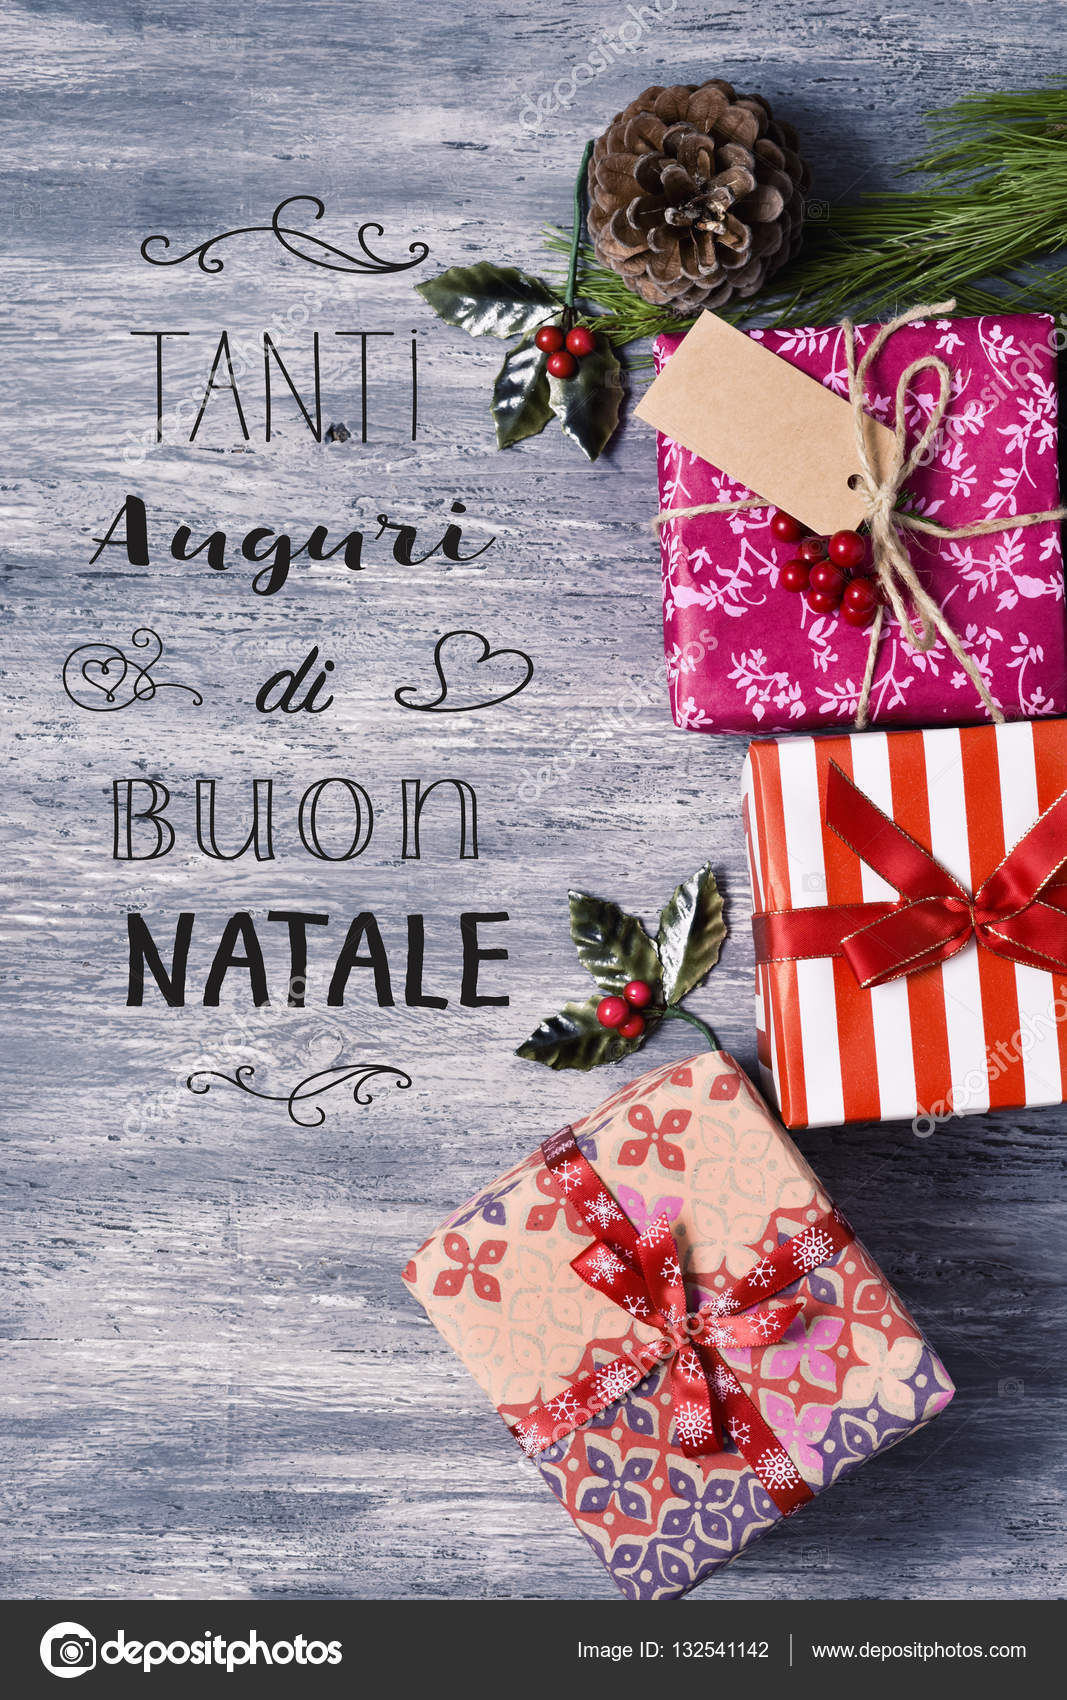 Auguri Di Buon Natale Lyrics.Text Tanti Auguri Di Buon Natale Merry Christmas In Italian Stock Photo C Nito103 132541142